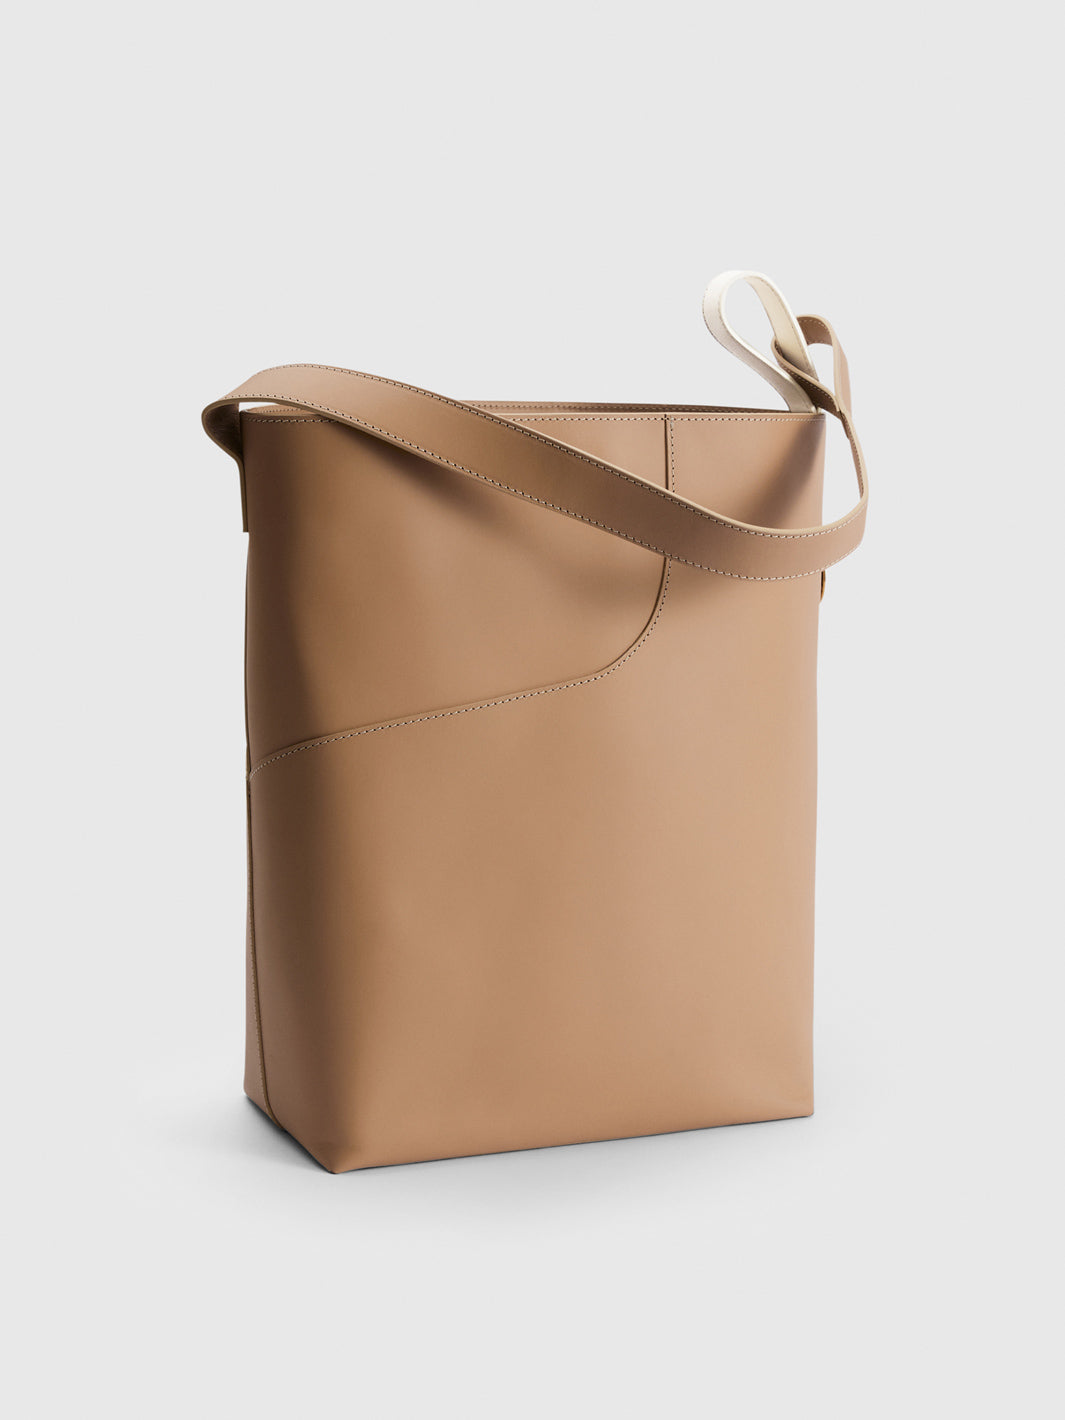 Pienza Nocciola/Linen Leather Large tote Bag